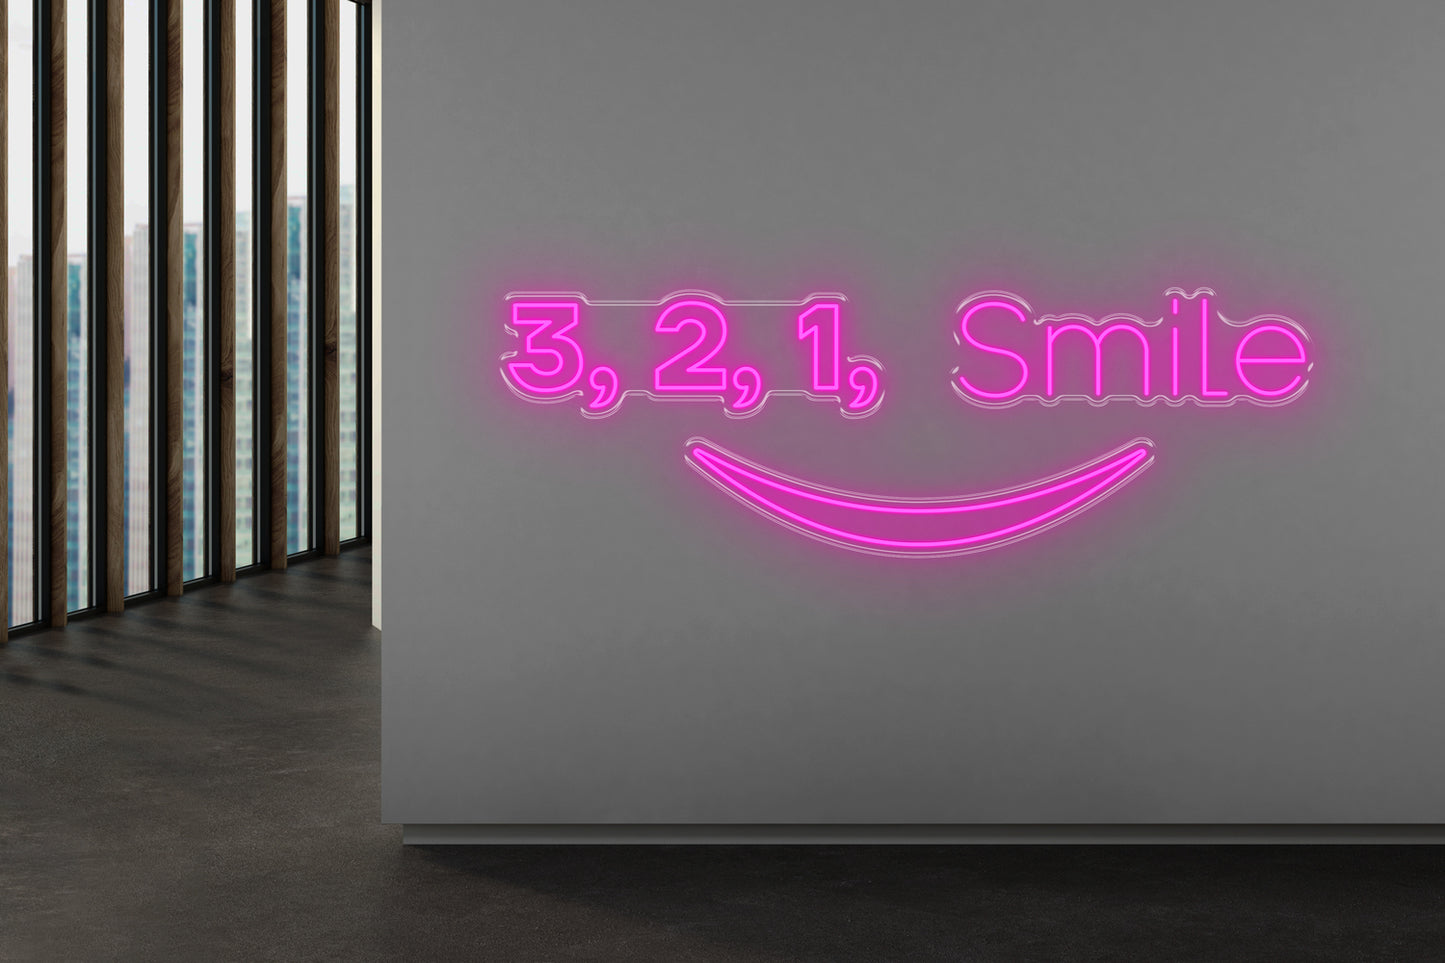 PowerLED Neon Sign (Indoor) - 321 smile